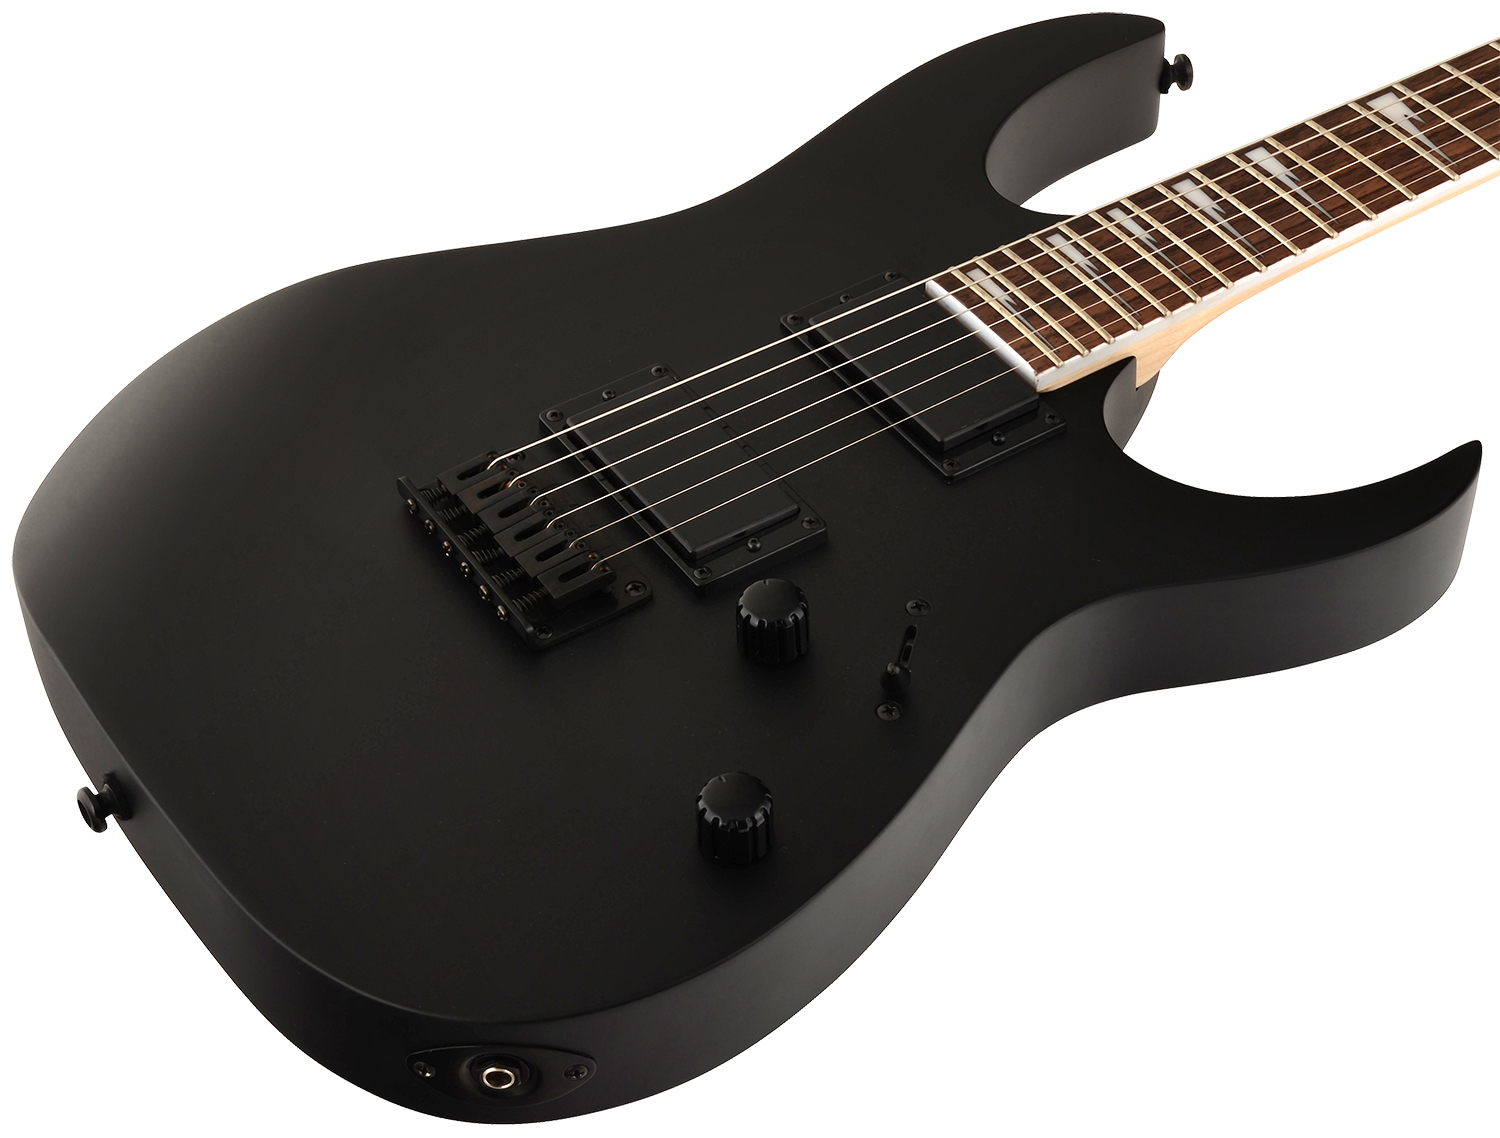 Ibanez Grg121dx Bkf Gio Hh Ht Pur - Black Flat - Str shape electric guitar - Variation 3